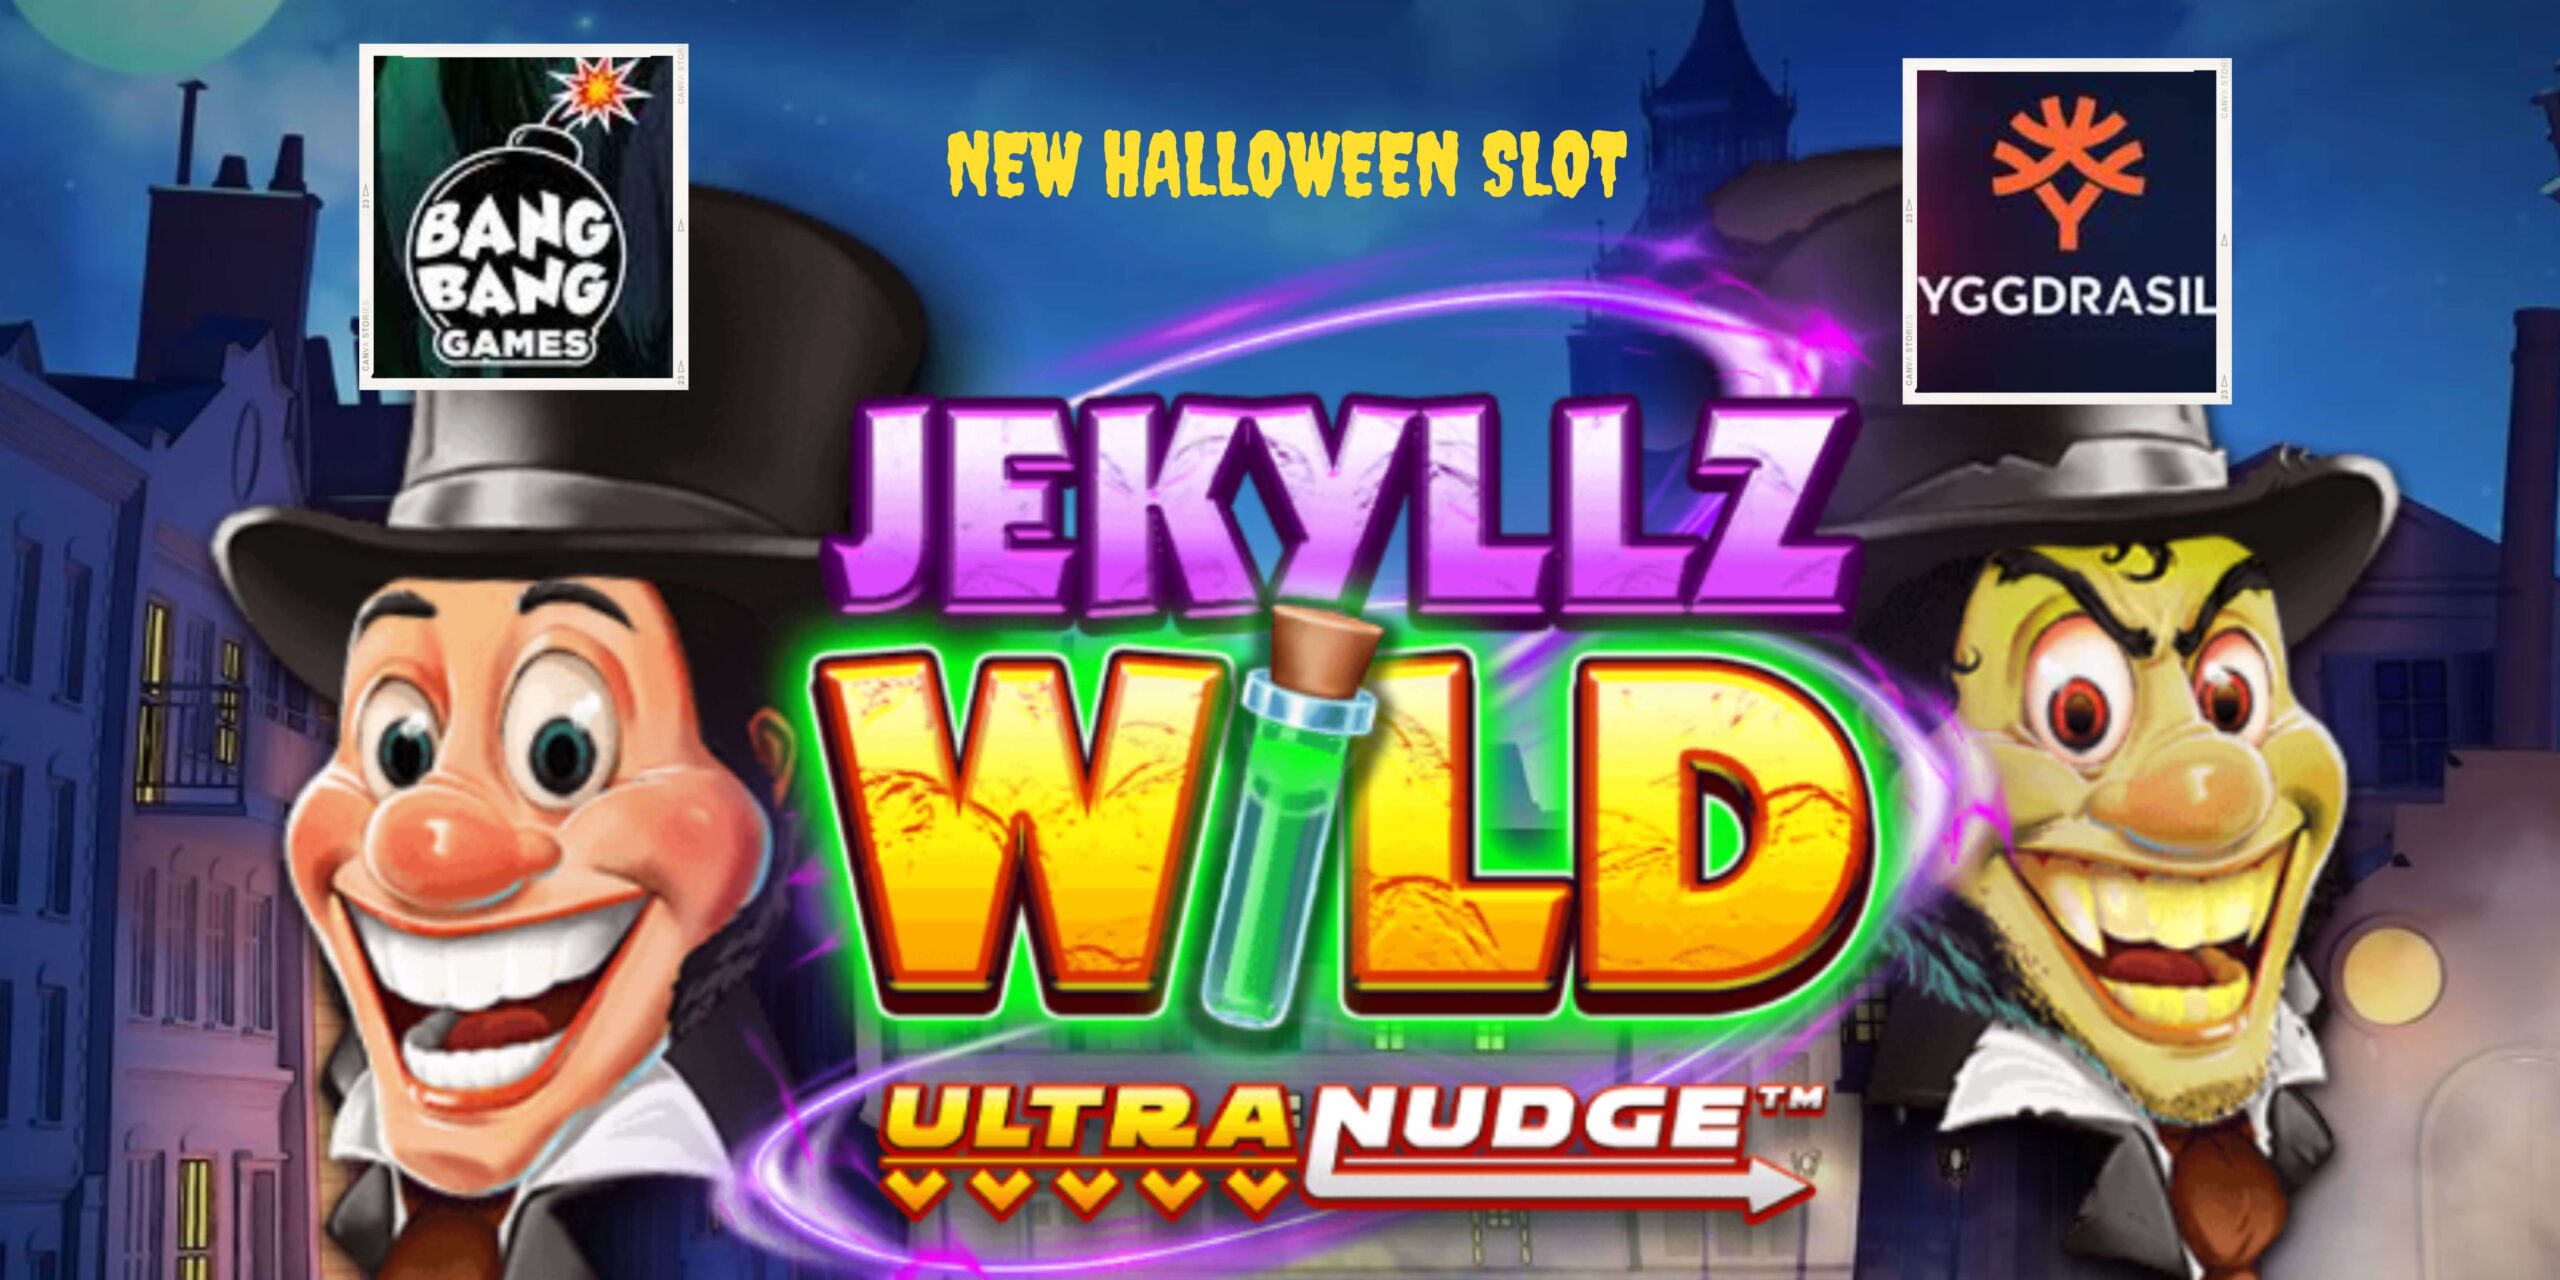 Yggdrasil & Bang Bang Games Launch Jekylzz Wild Ultranudge Slot for Halloween